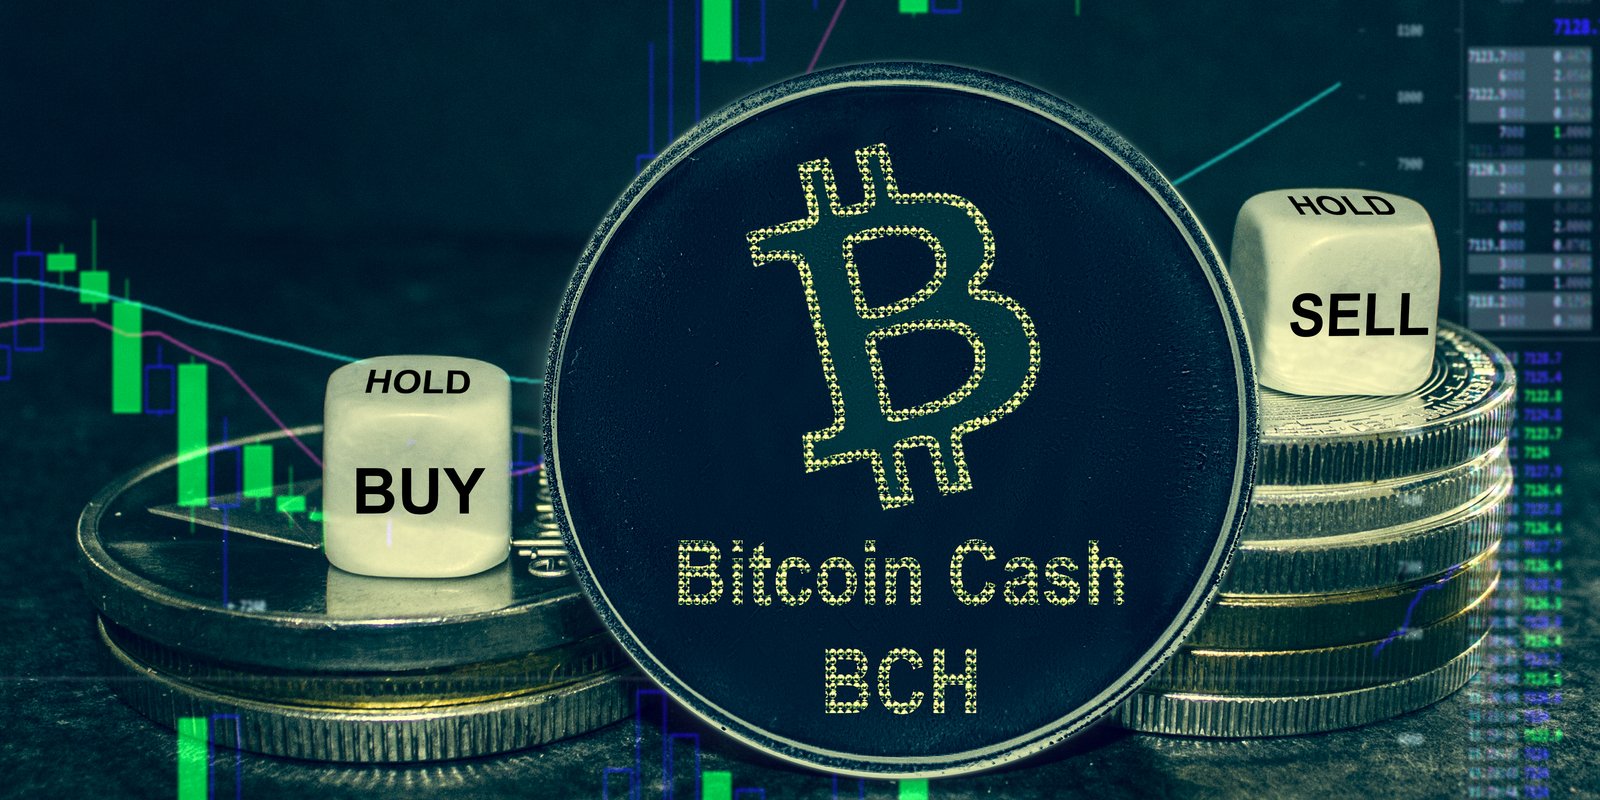 Exchange to buy bitcoin cash прогноз биткоина на 2021 год в рублях